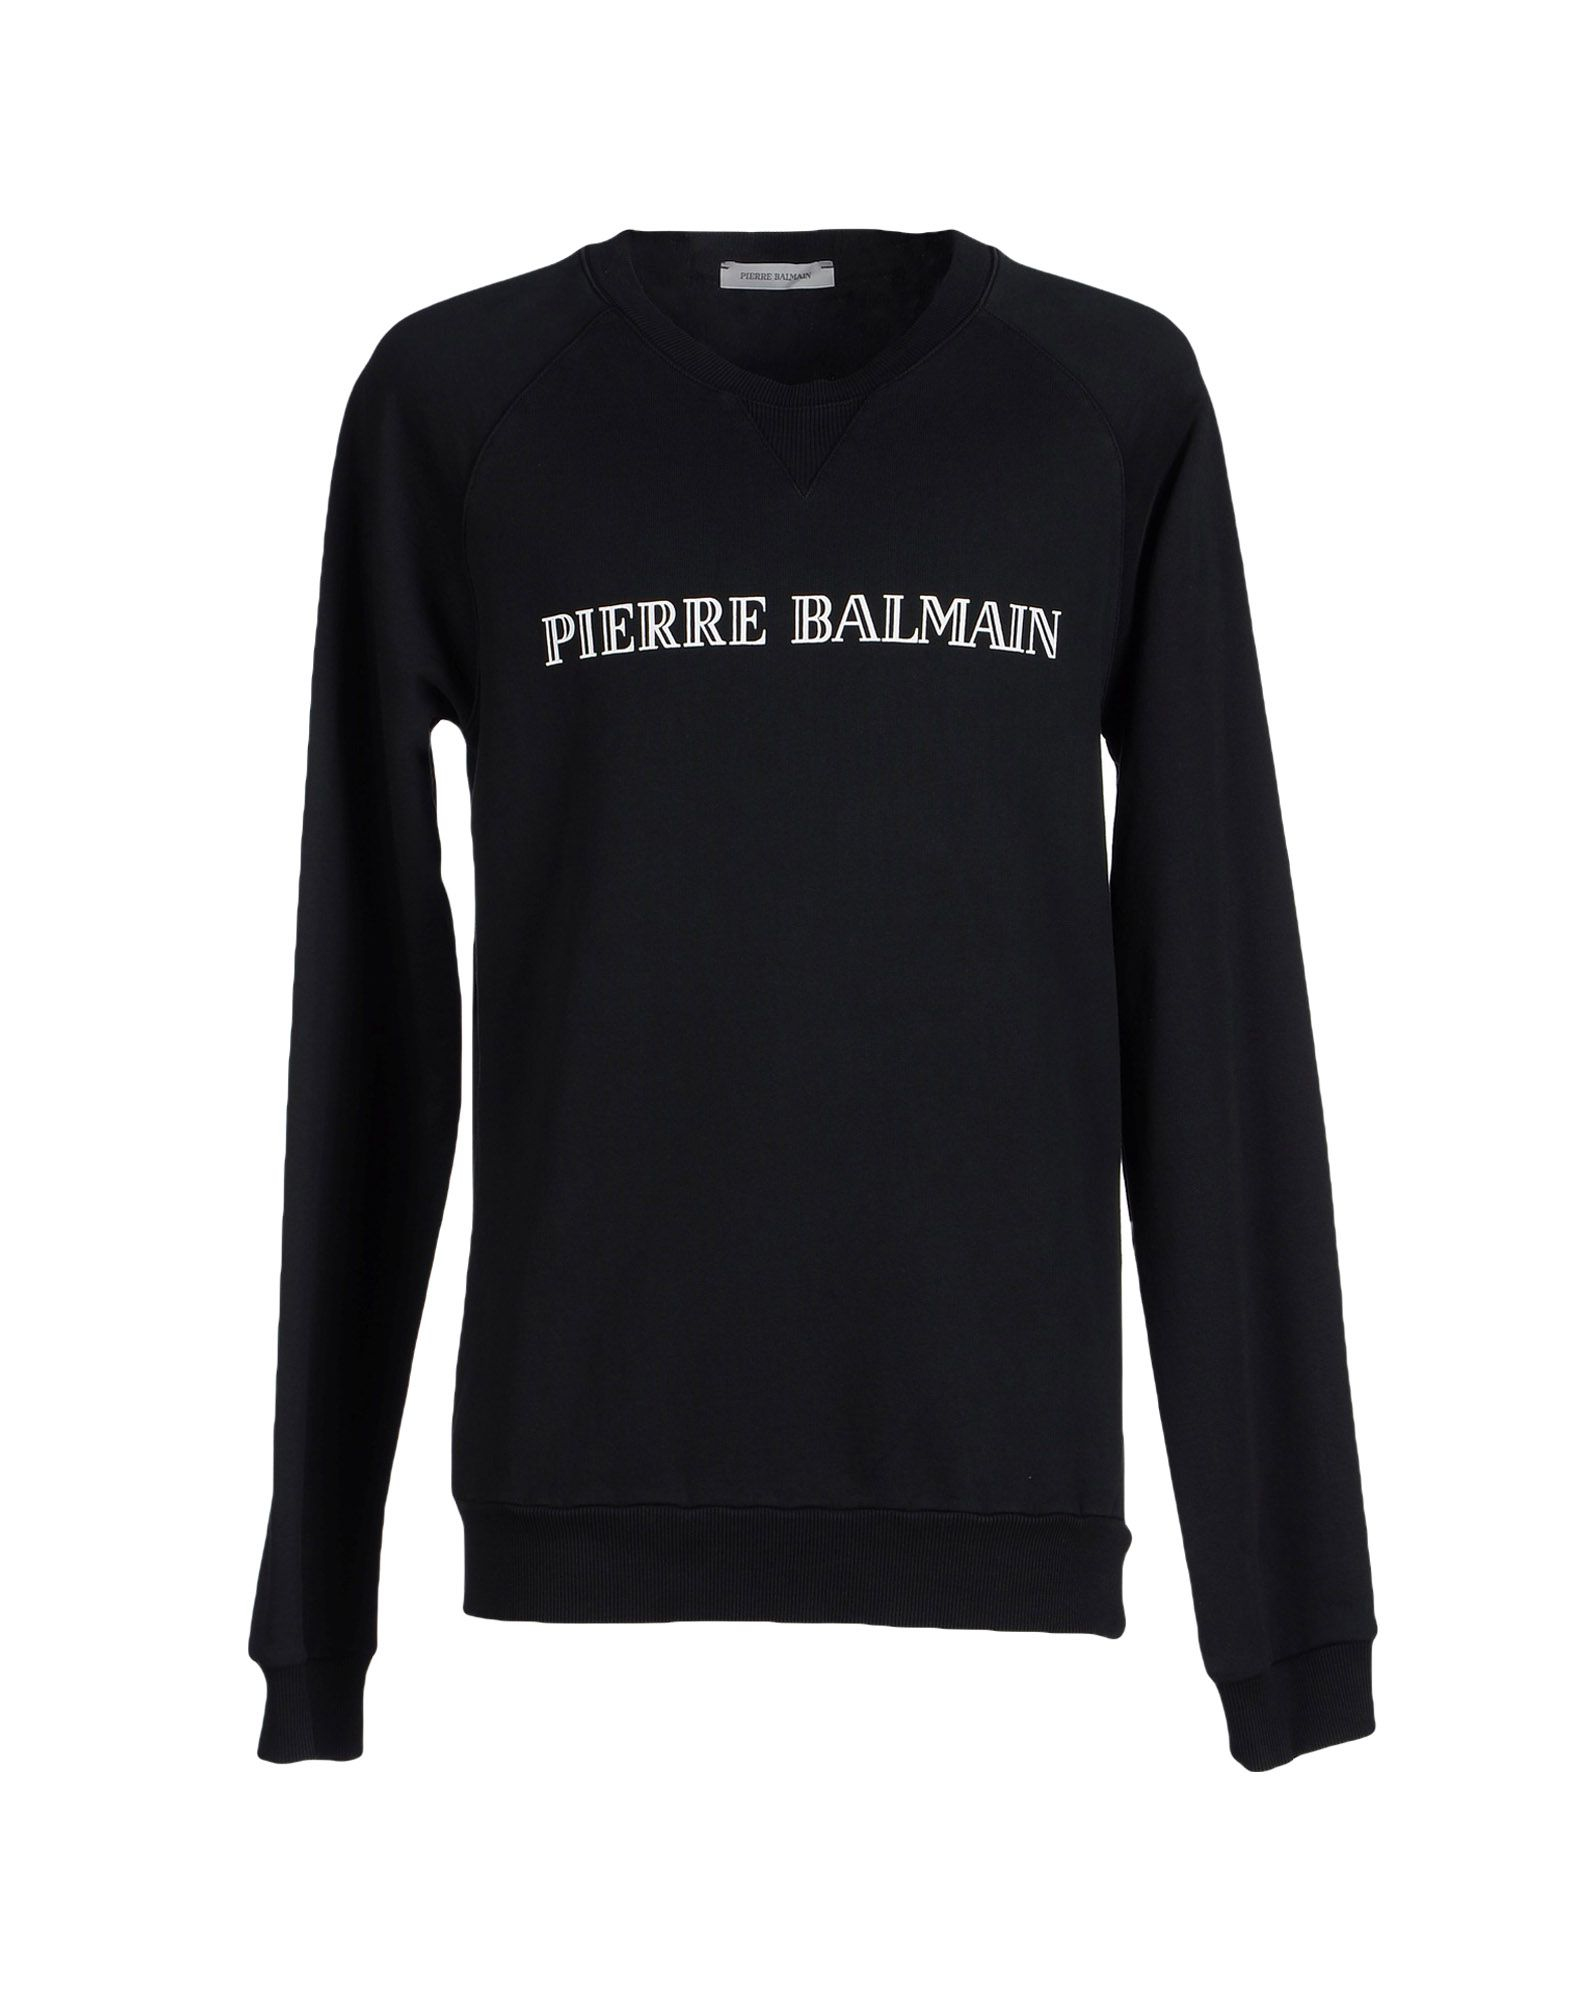 Lyst - Balmain Sweatshirt in Black for Men